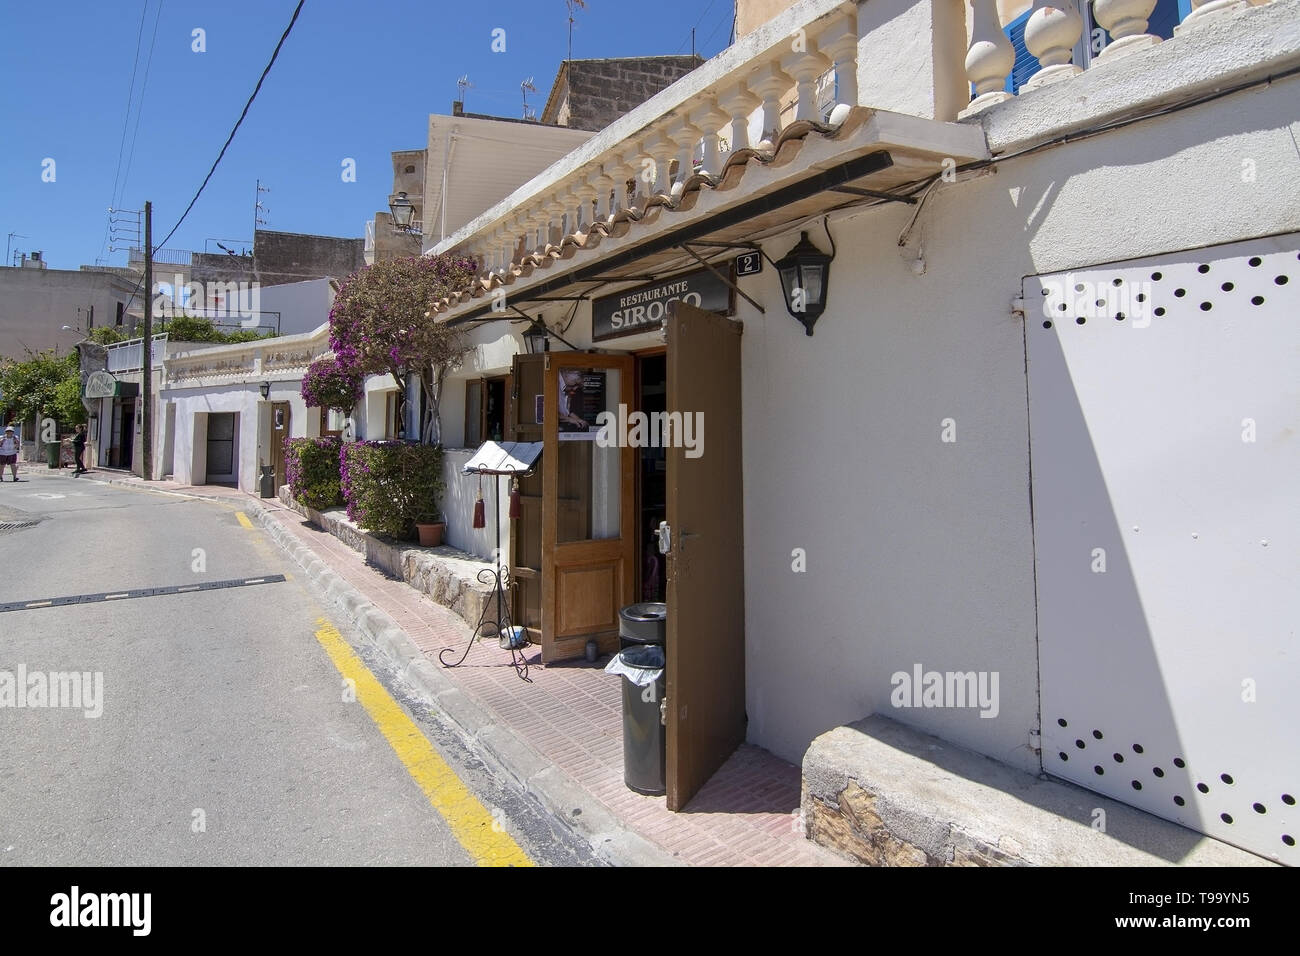 PORTO CRISTO, MALLORCA, SPAIN - MAY 16, 2019: Harbor area restaurant Siroco front on a sunny day on May 16, 2019 in Porto Cristo, Mallorca, Spain. Stock Photo